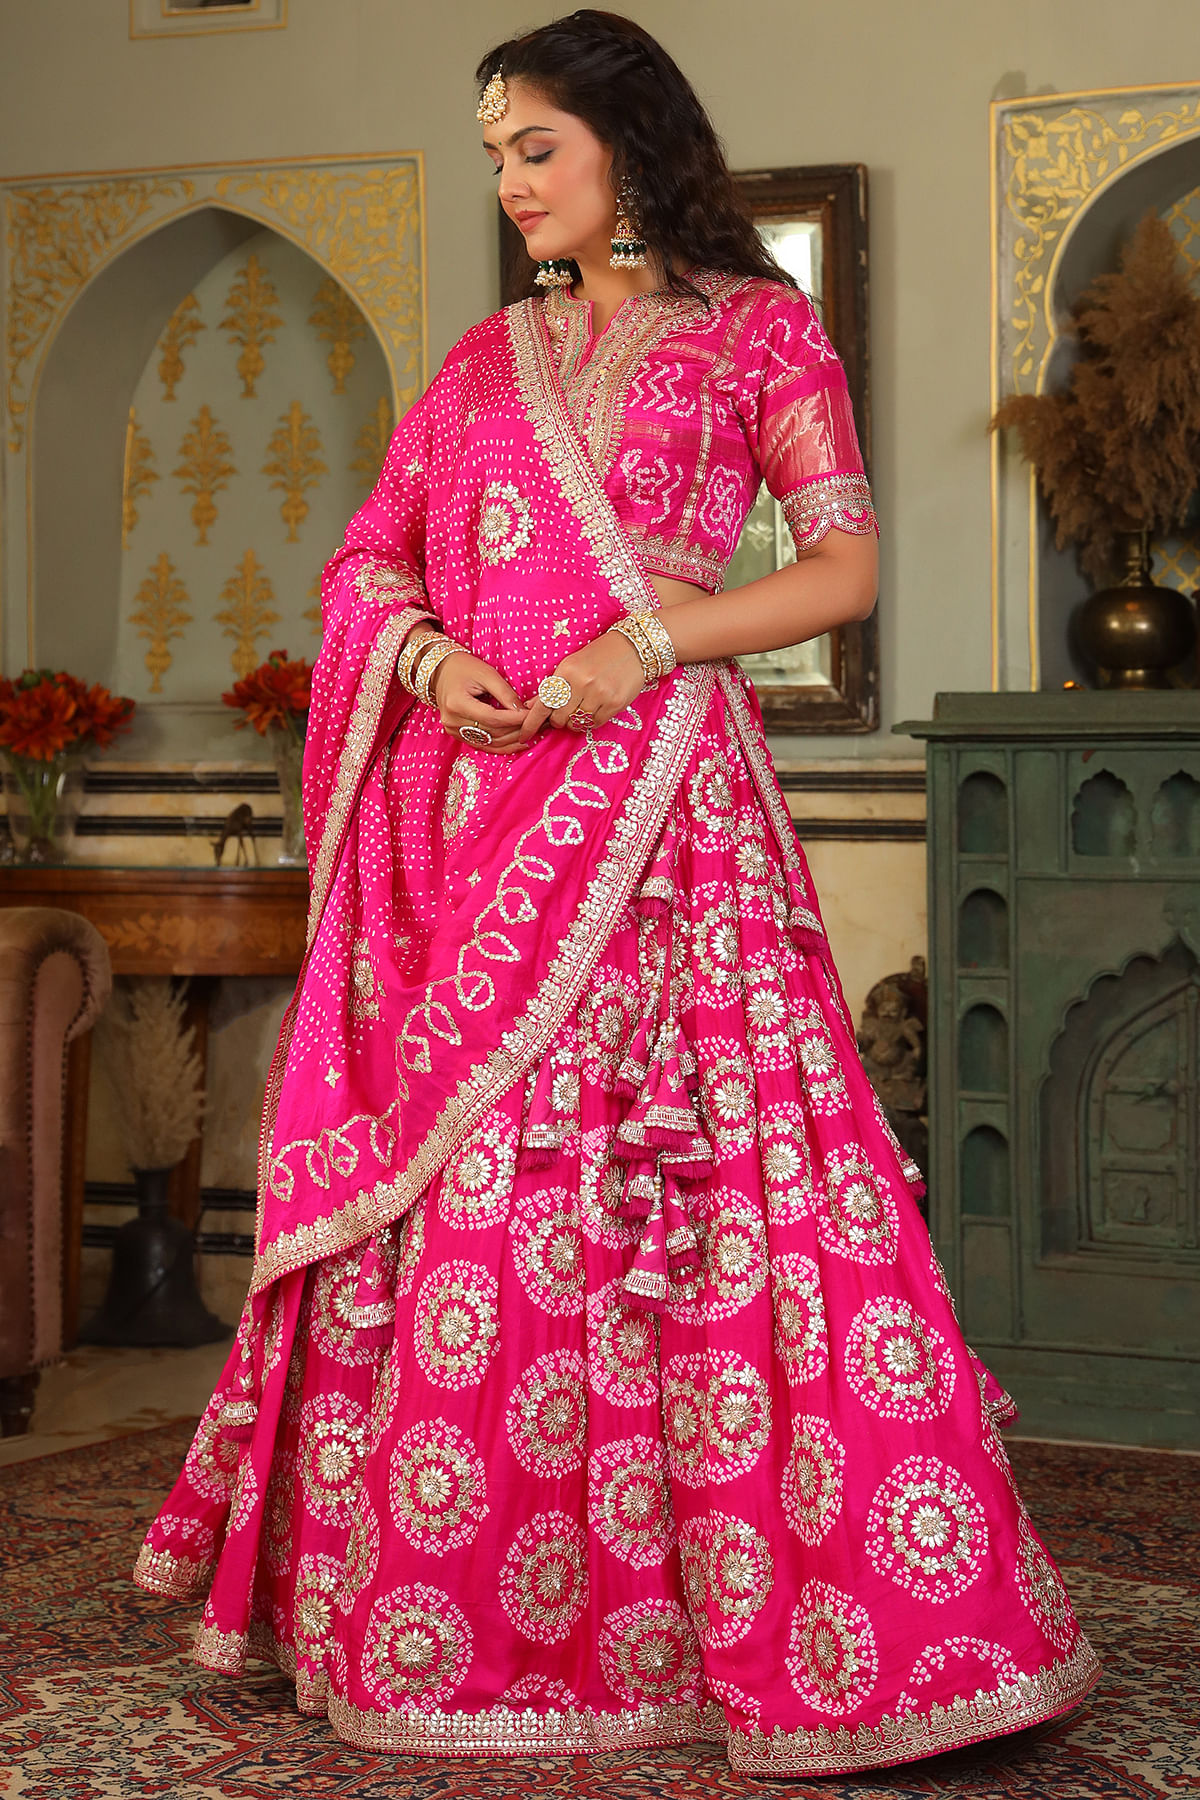 Naina Jain For Ethnic & Bridal Wear | LBB, Kolkata